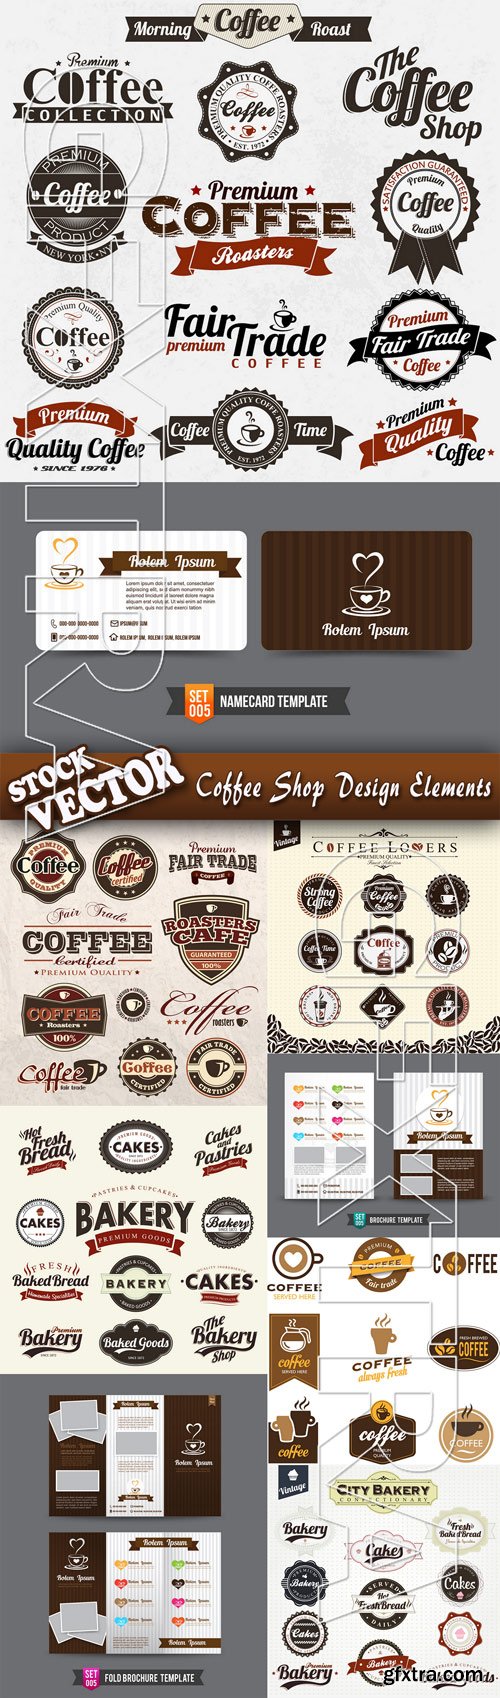 Stock Vector - Coffee Shop Design Elements